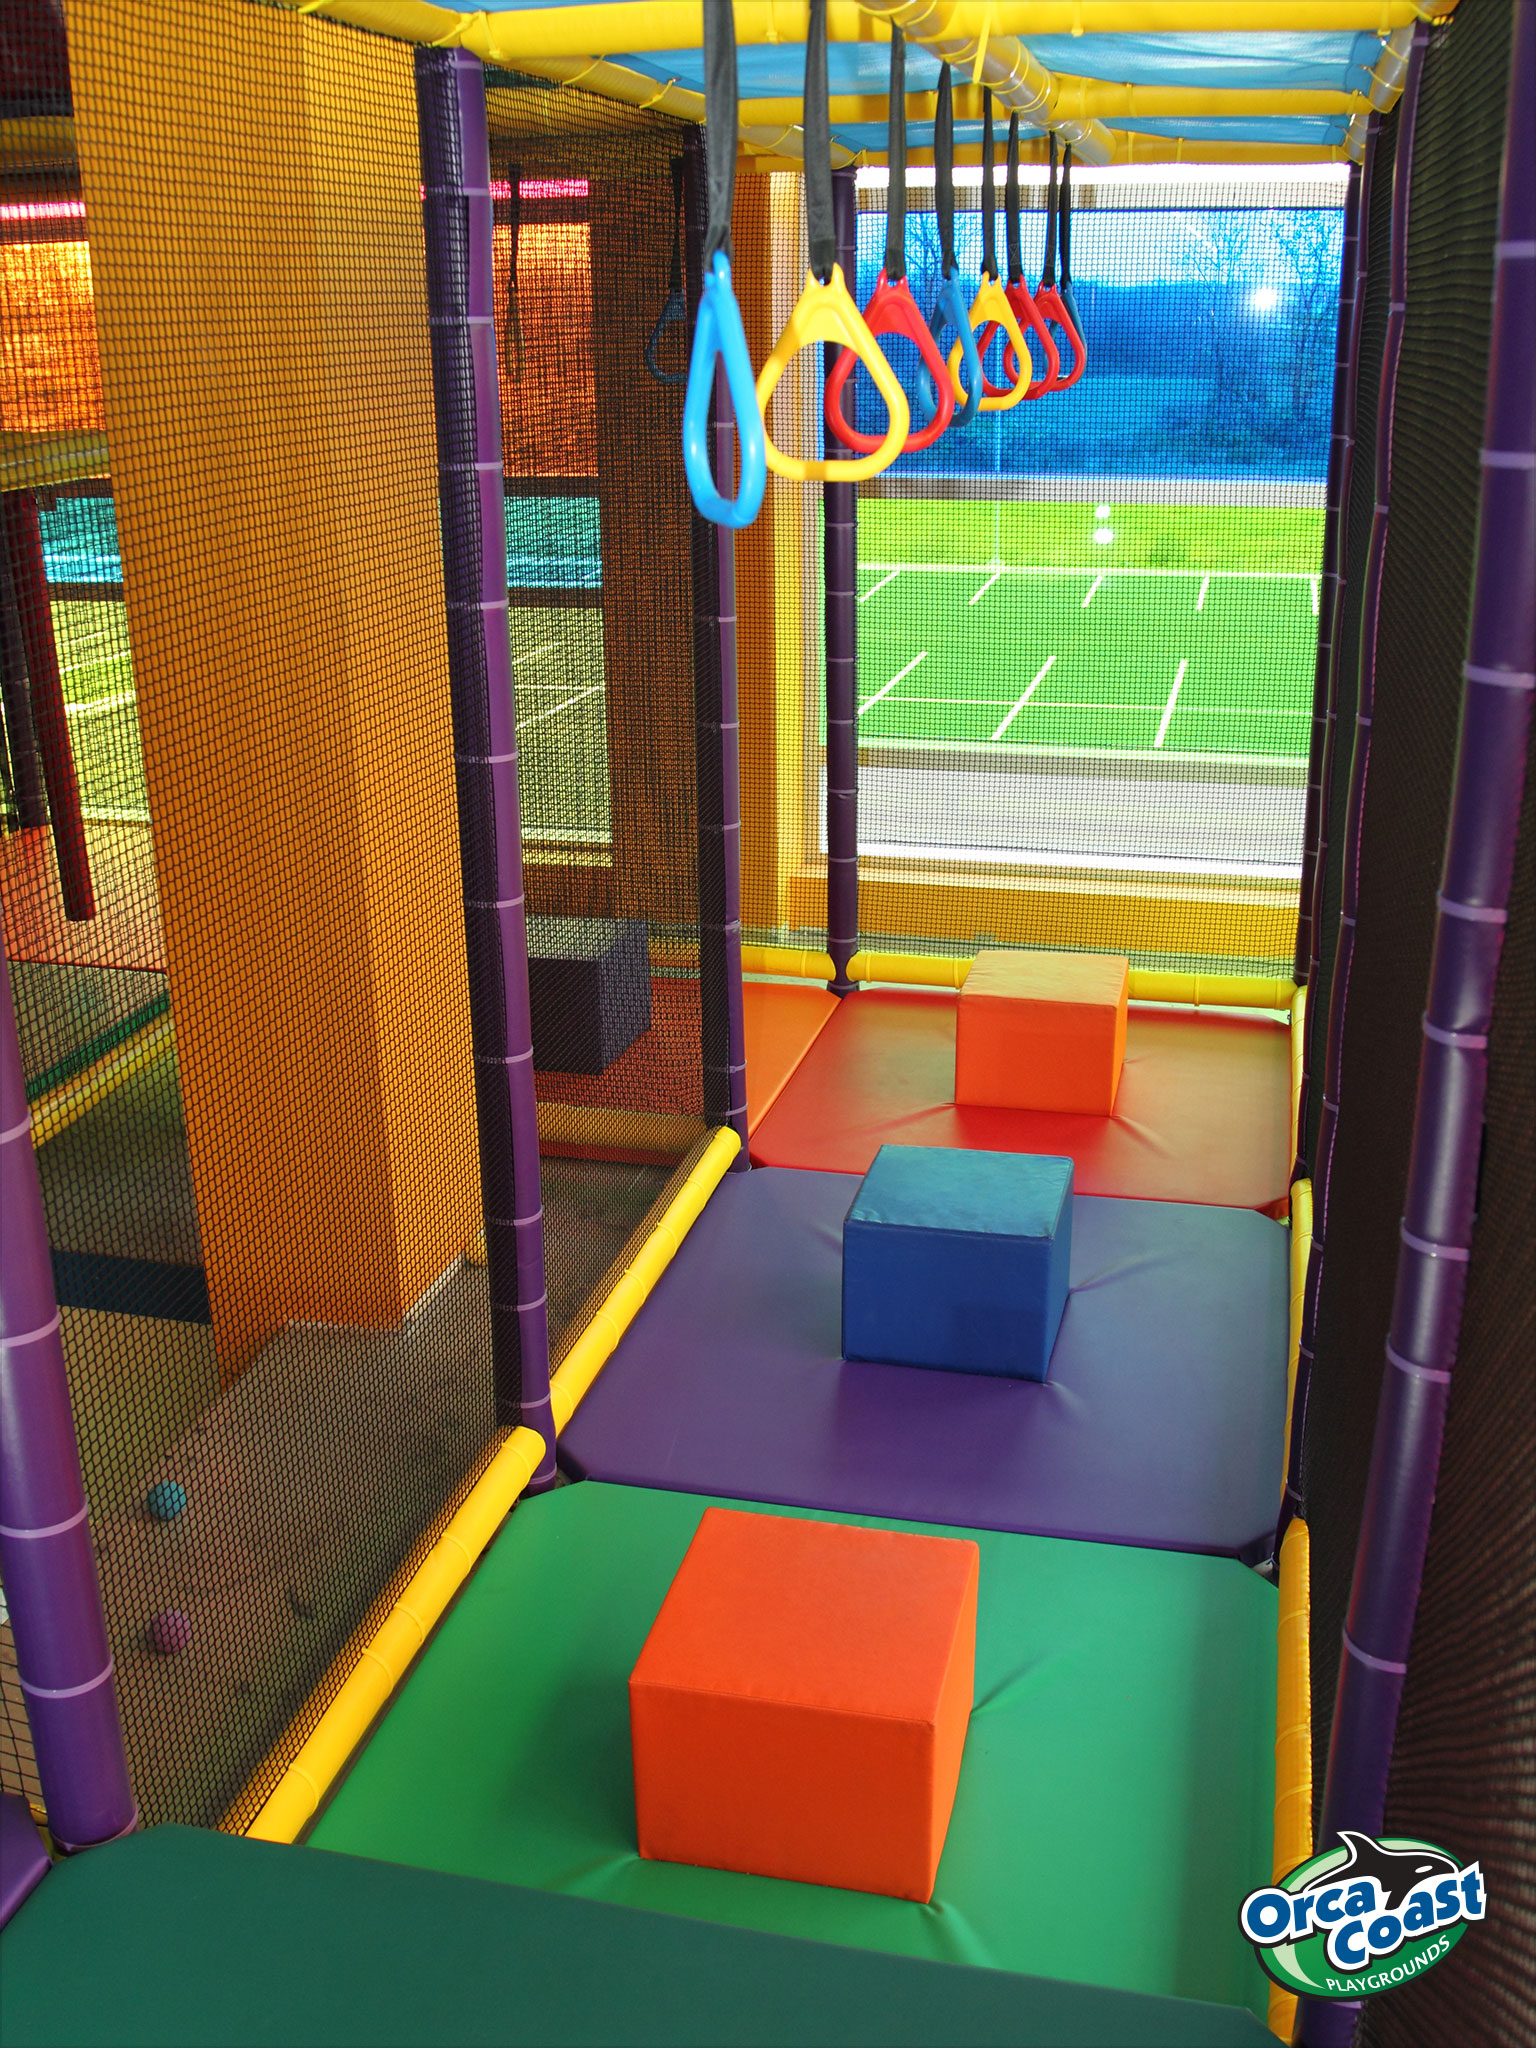 Woo-Hoo: Canada’s Largest Indoor Playground in Vaudreuil, QC